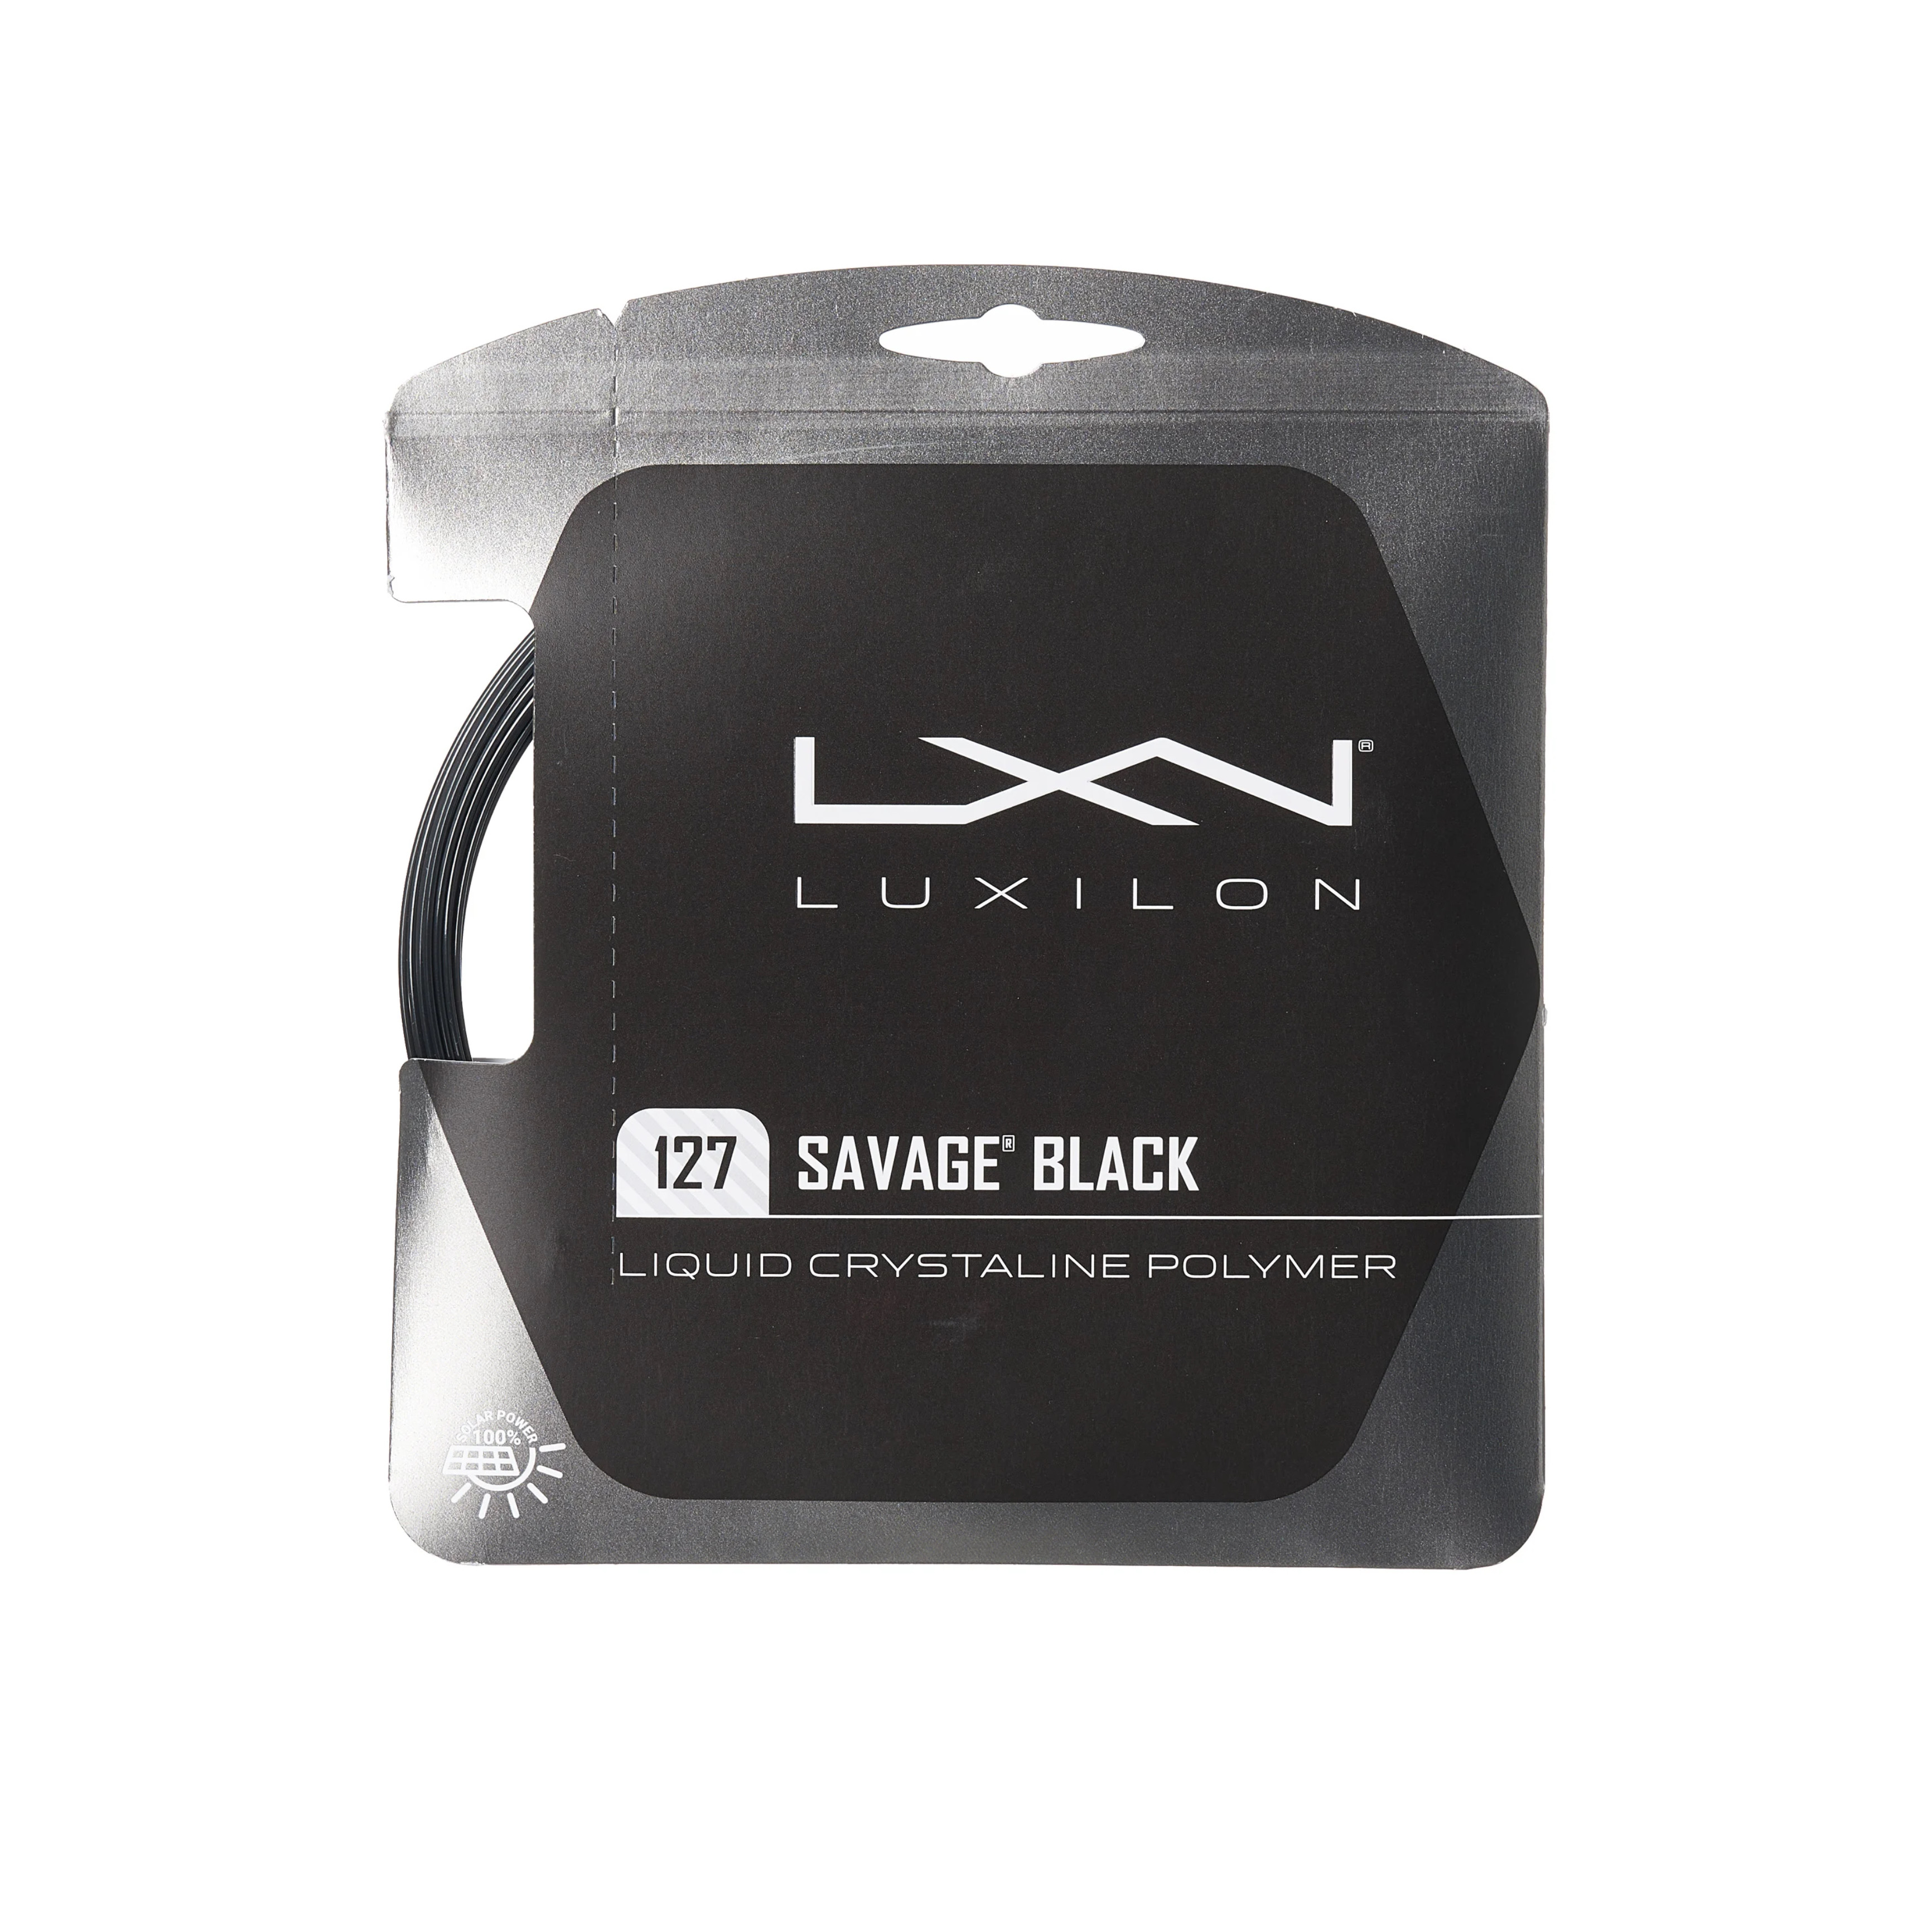 luxilon-savage-black-127